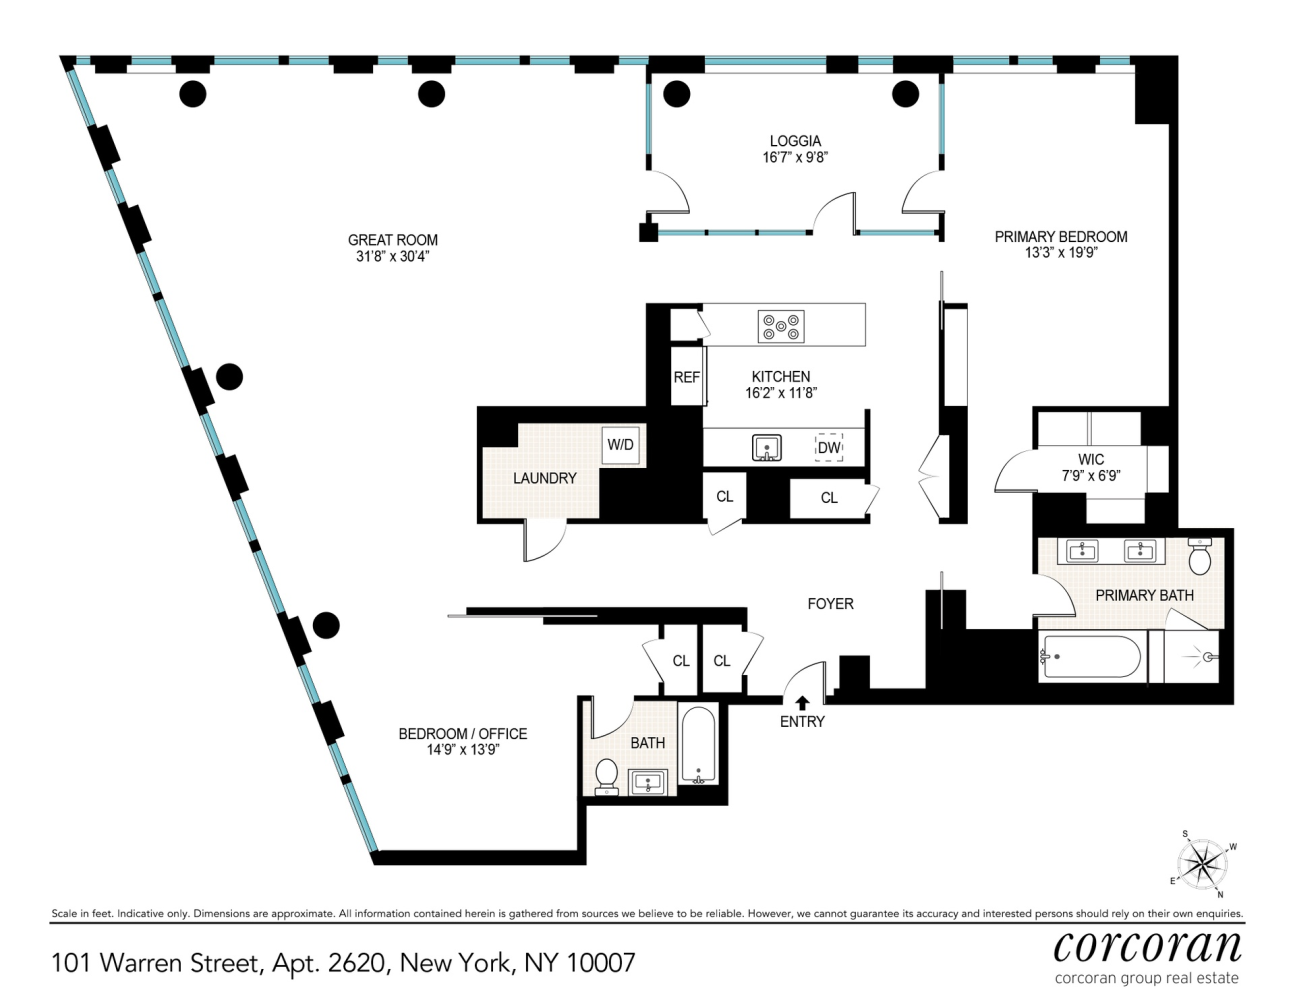 Floorplan for 101 Warren Street, 2620